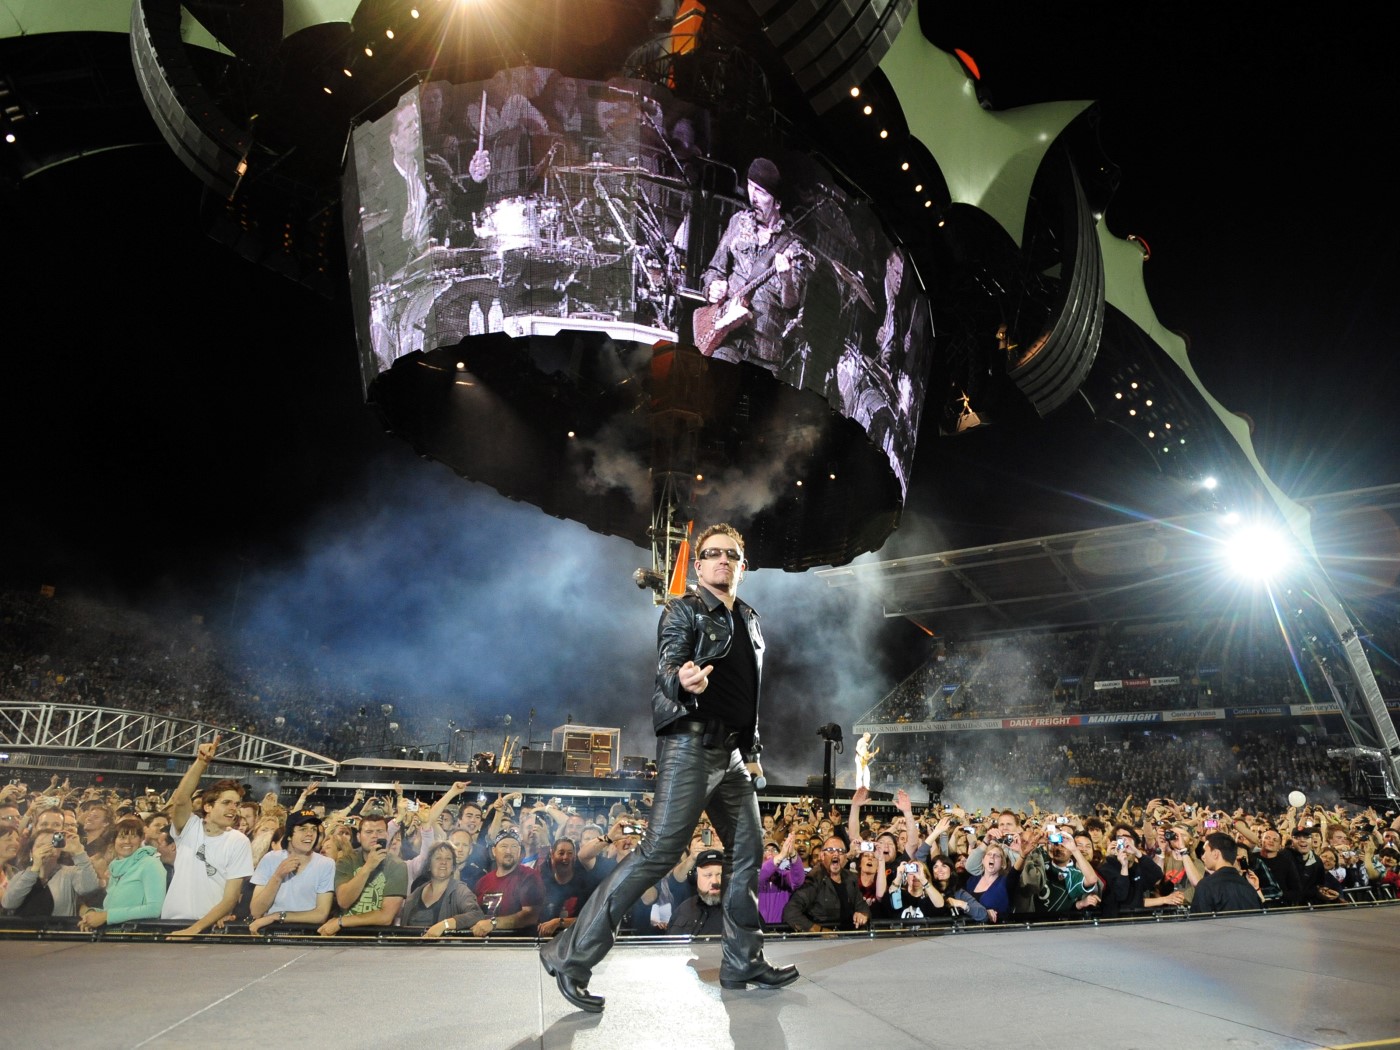 Craig Baxter - U2 frontman Bono salutes the crowd at Mt Smart Stadium in November 2010 